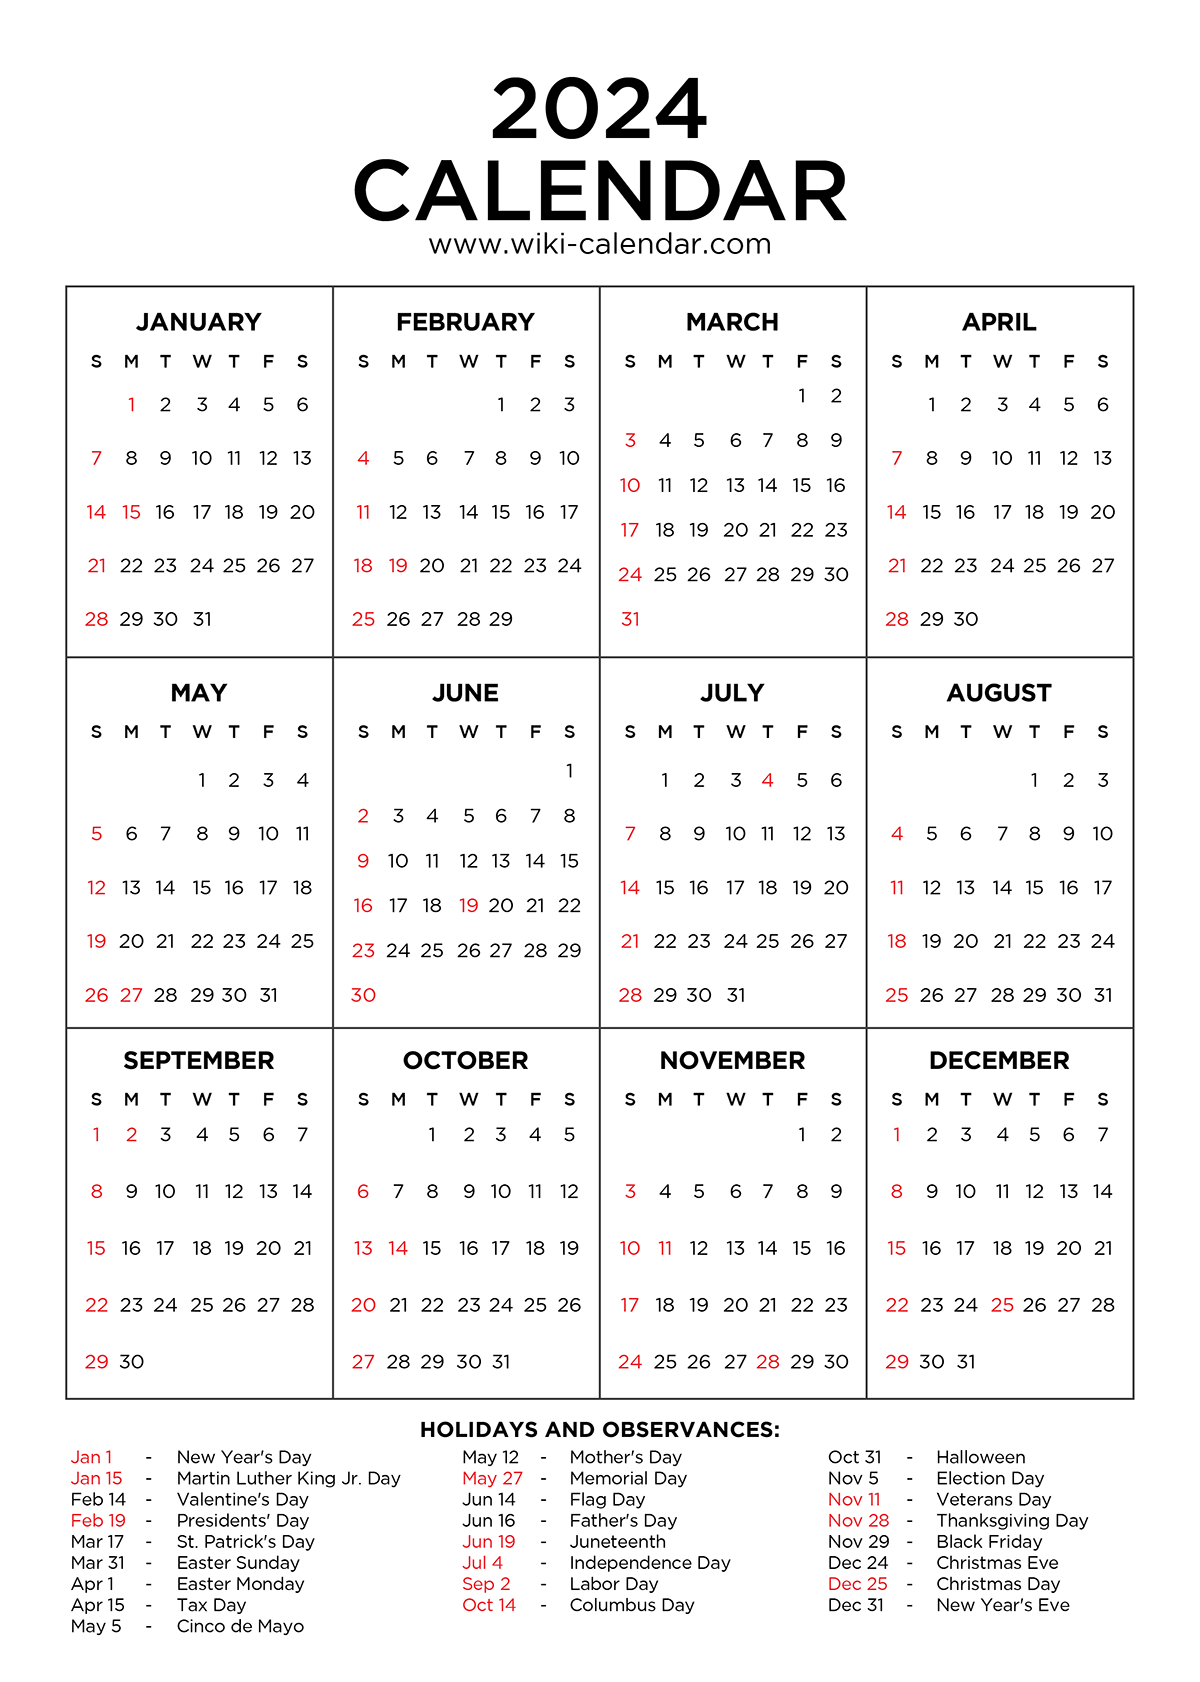 Year 2024 Calendar Printable With Holidays - Wiki Calendar | Free Printable Calendar 2024 Wiki Calendar